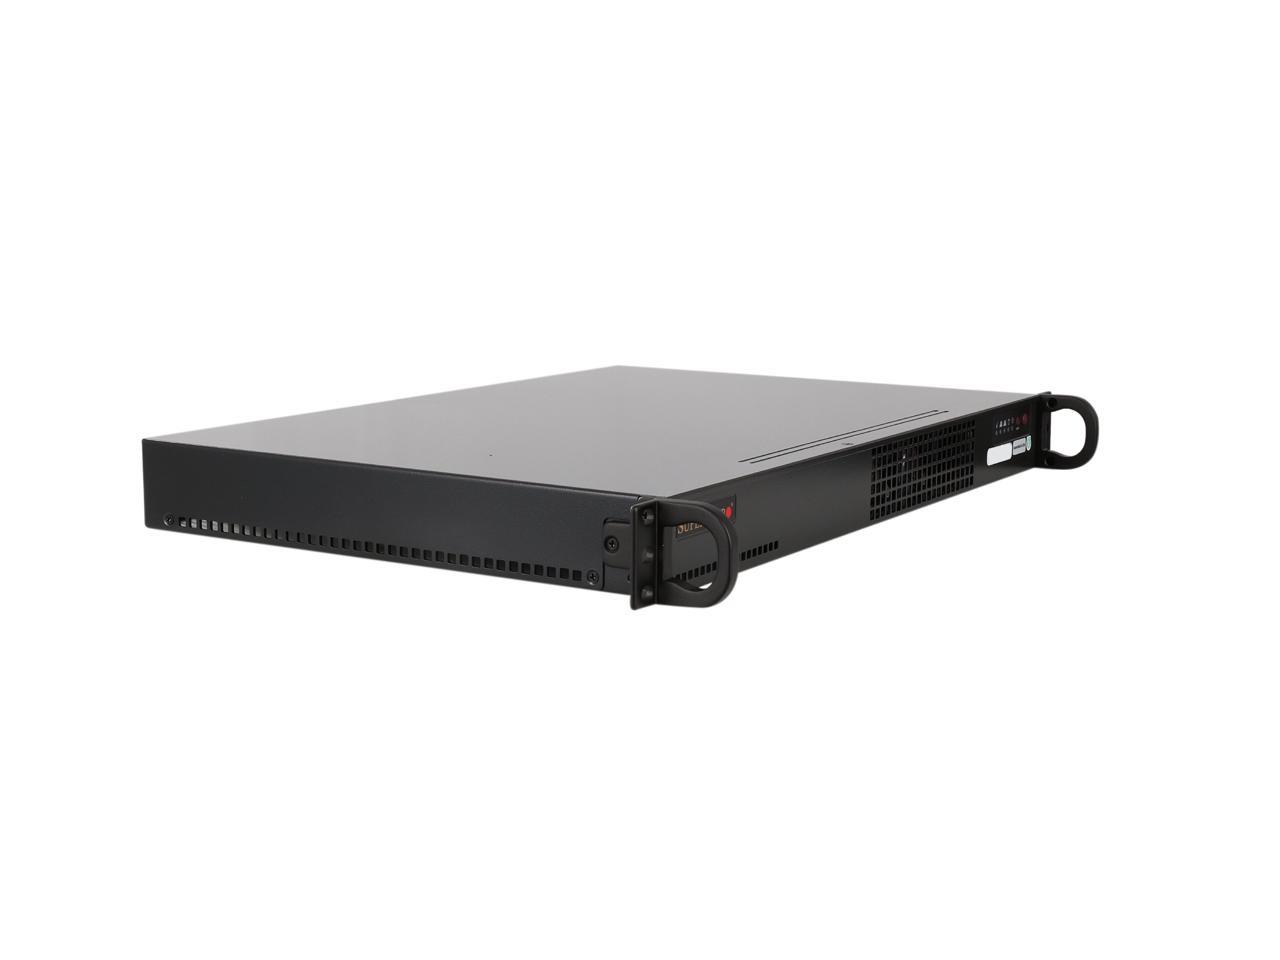 SUPERMICRO SYS-5019S-L 1U Rackmount Server Barebone - Newegg.com